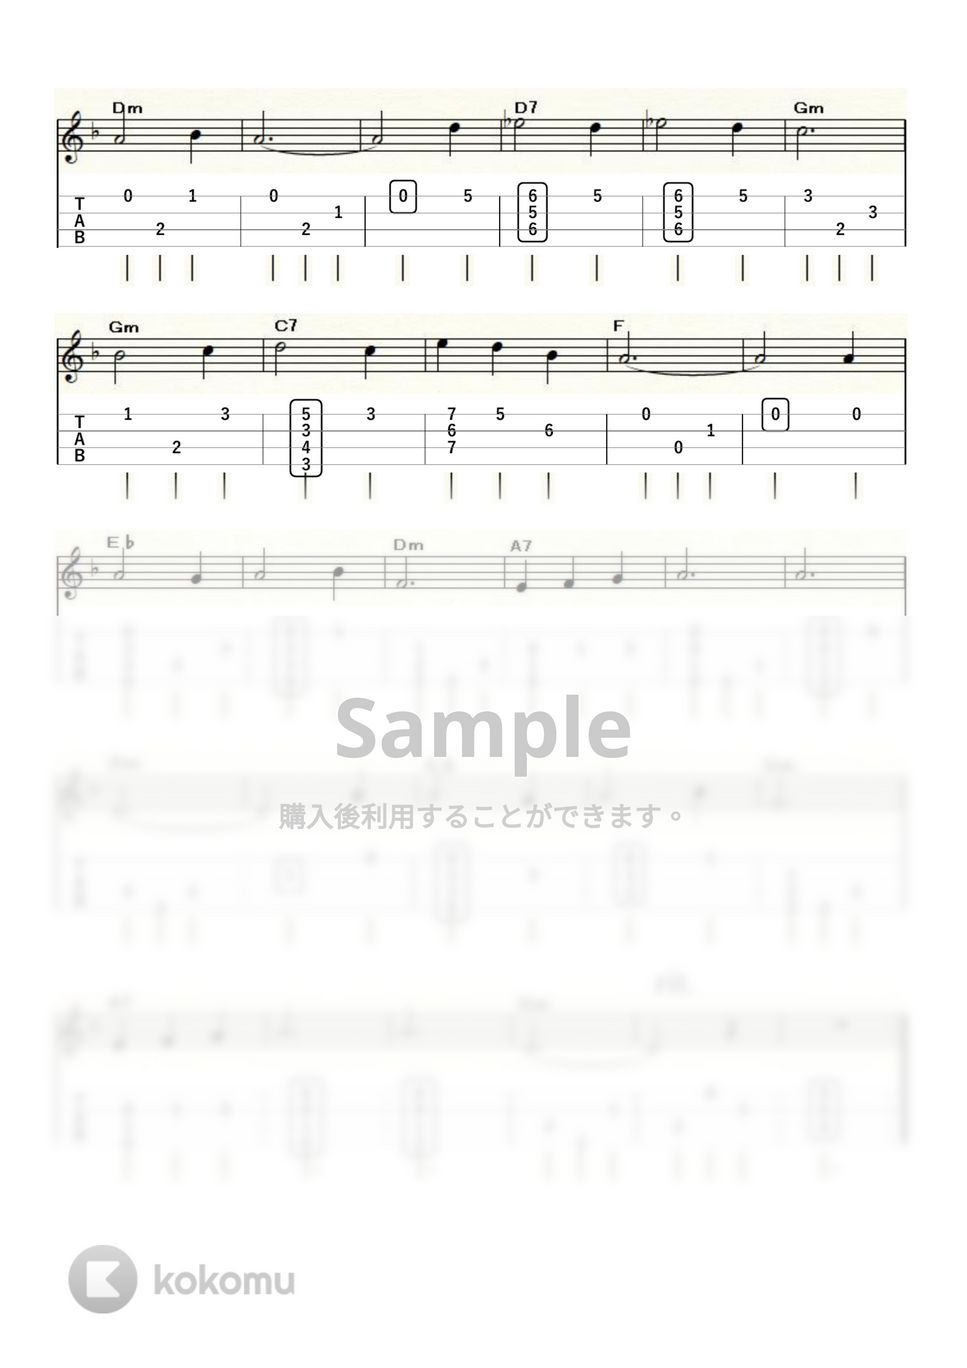 Nino ROTA - 太陽がいっぱい (ｳｸﾚﾚｿﾛ / Low-G / 初級～中級) by ukulelepapa